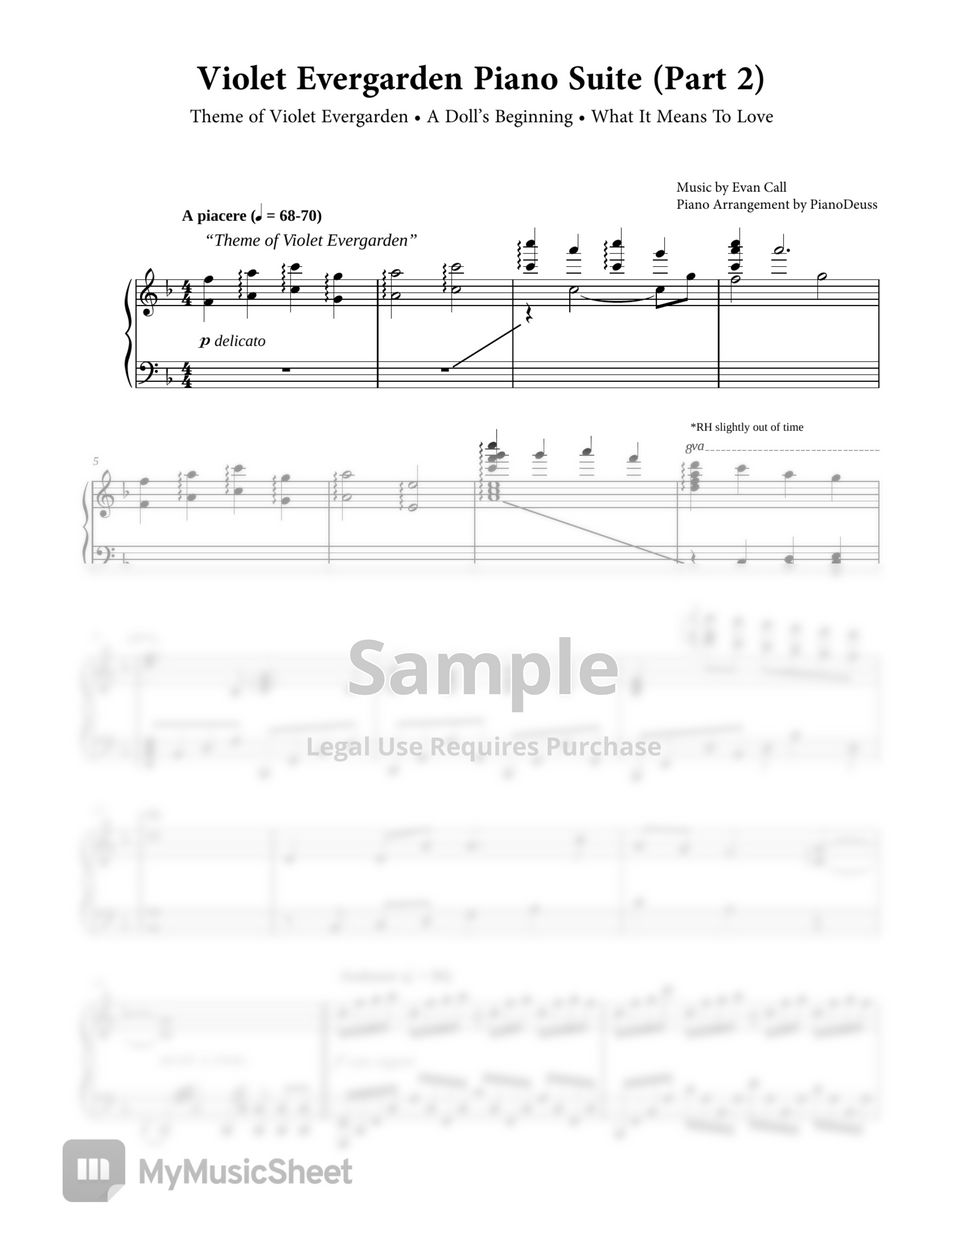 Evan Call - Violet Evergarden Piano Suite (Part 2) by PianoDeuss